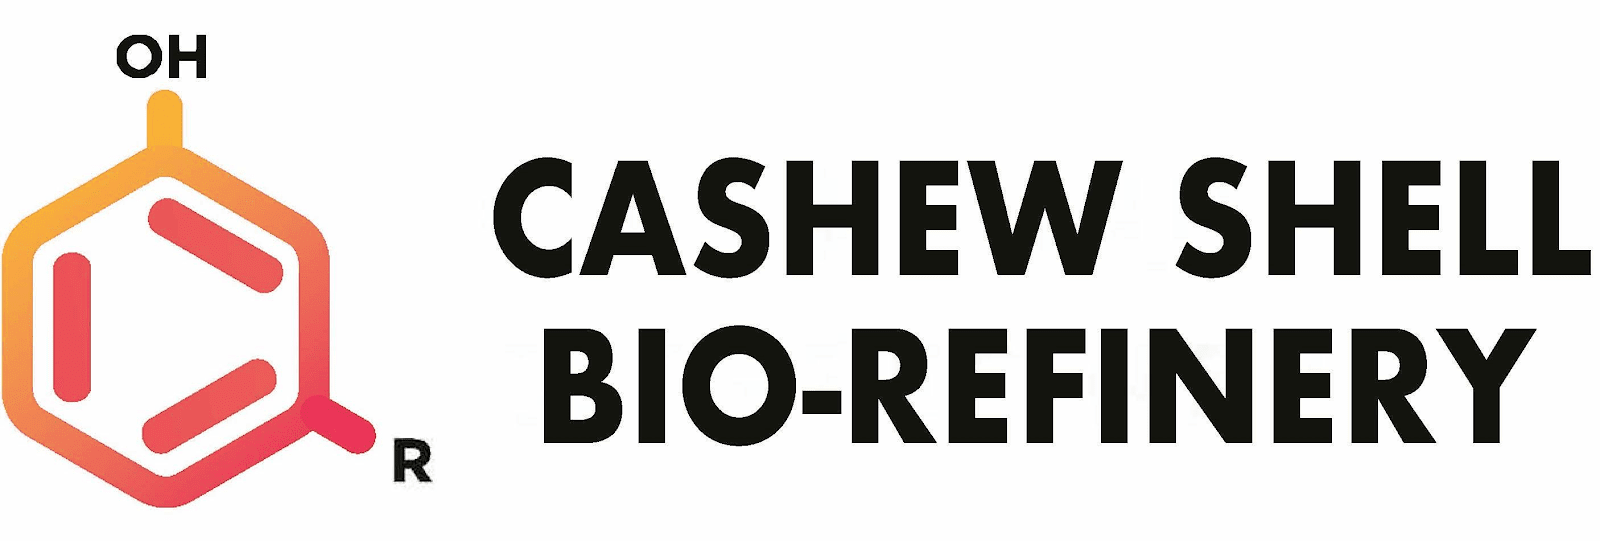 Cashew Shell Biorefinery.jpg